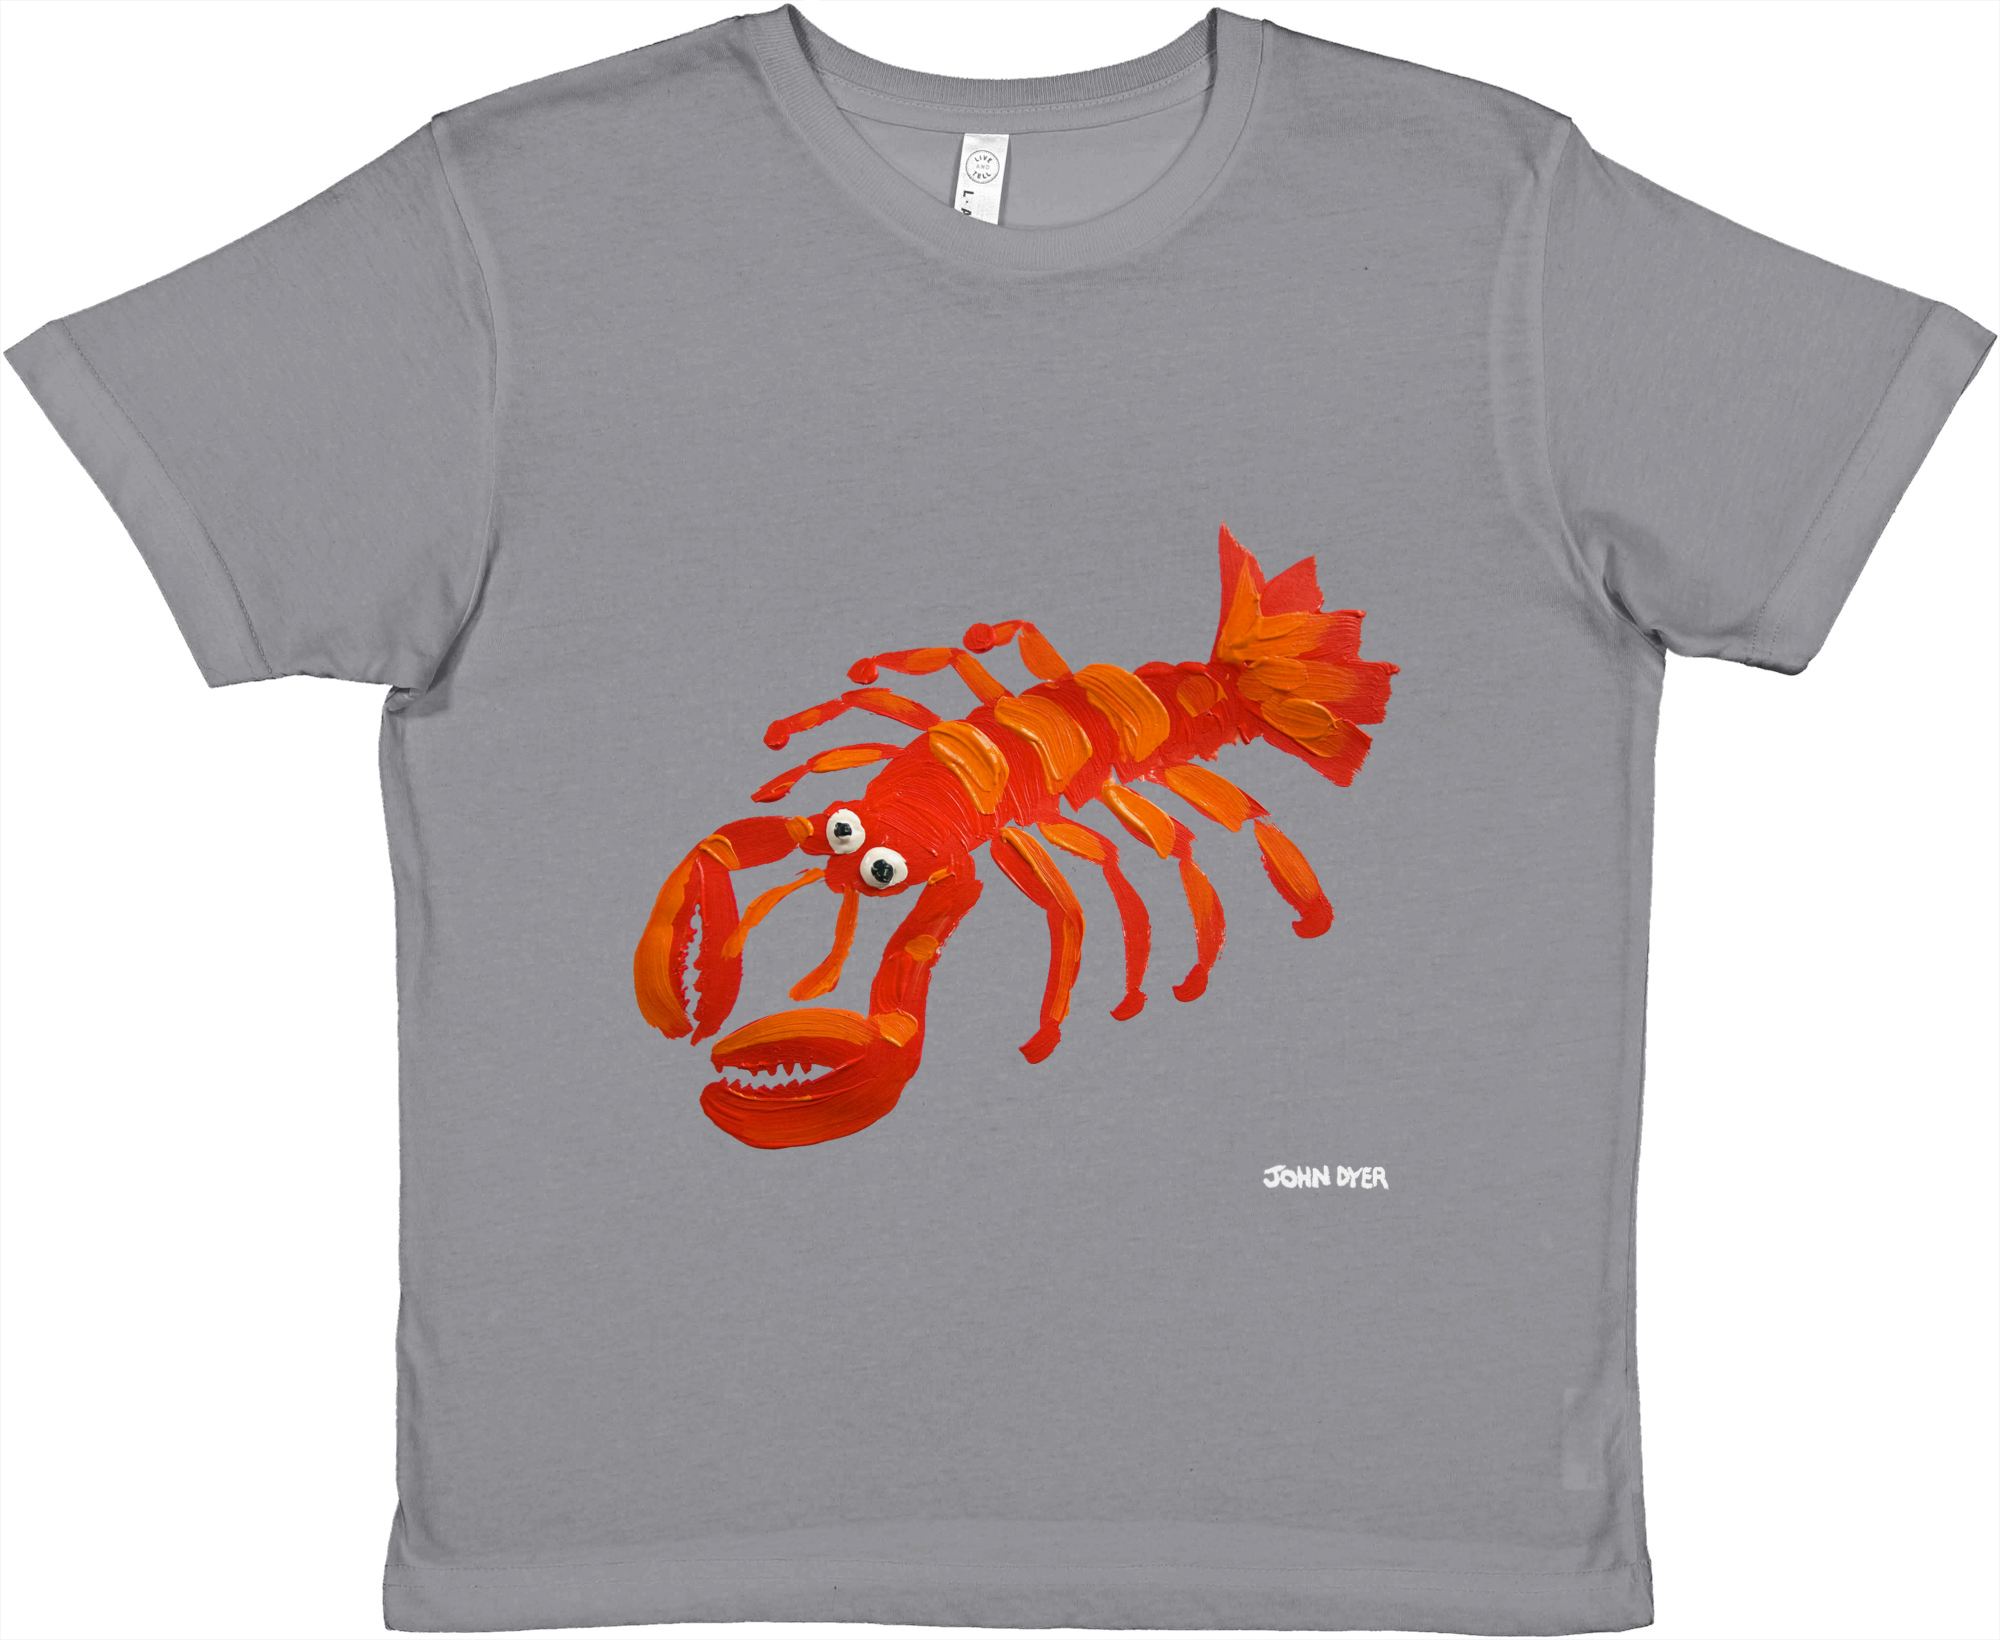 Cornish Lobster kids art t-shirt by John Dyer